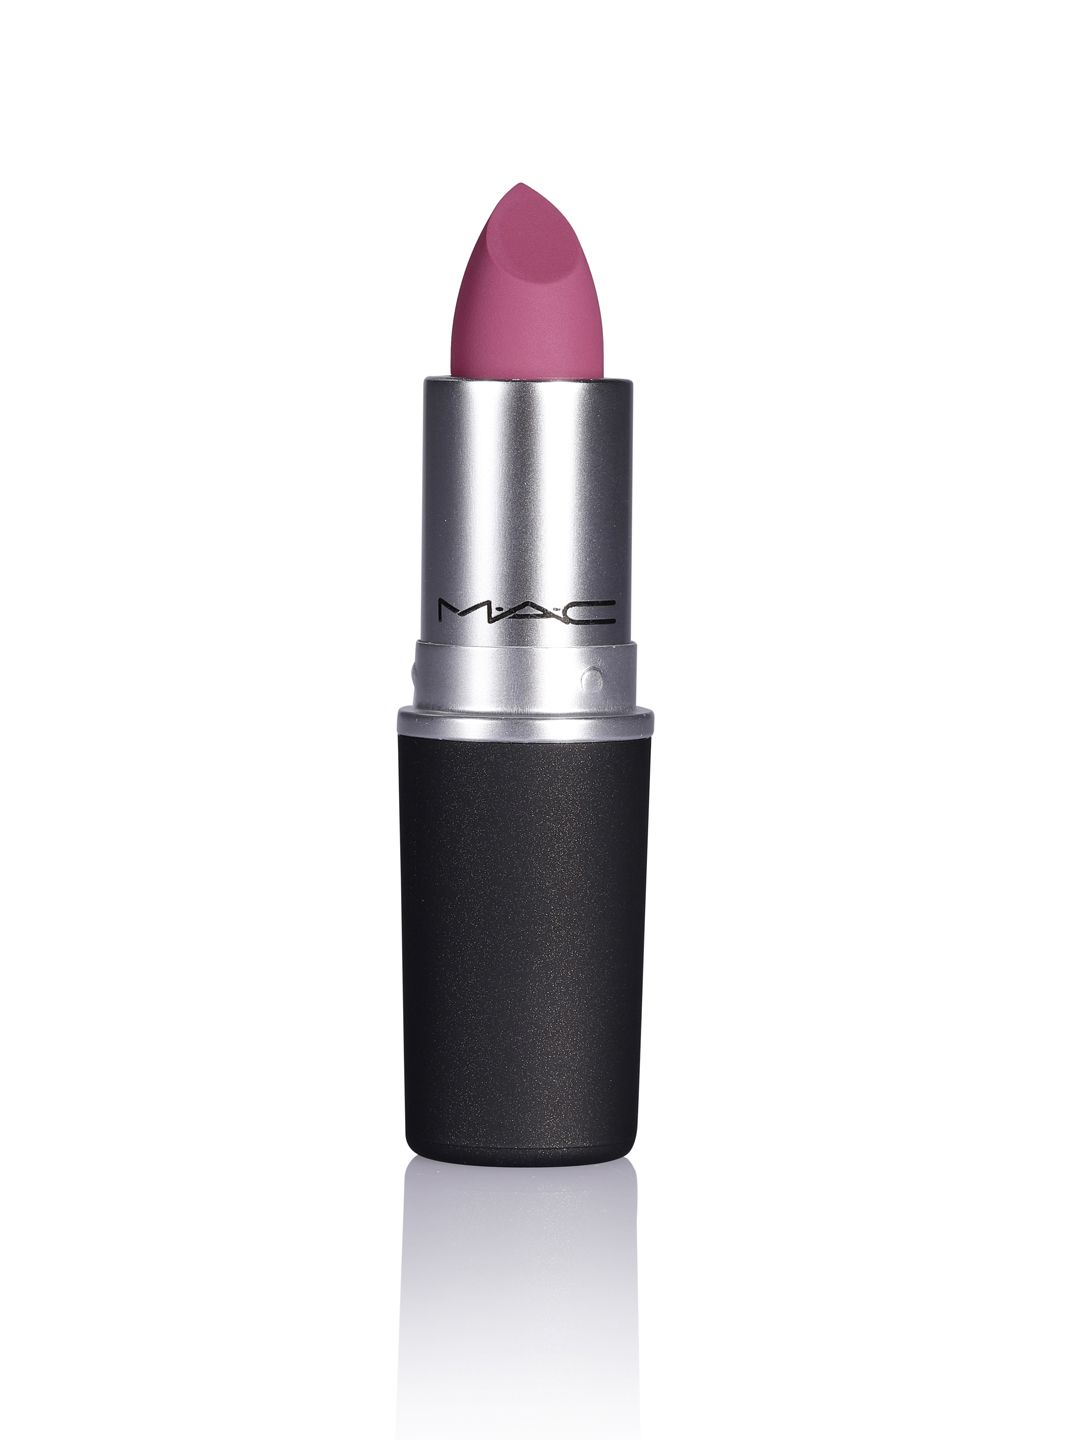 M.A.C Powder Kiss Lipstick- Velvet Punch 920 Price in India